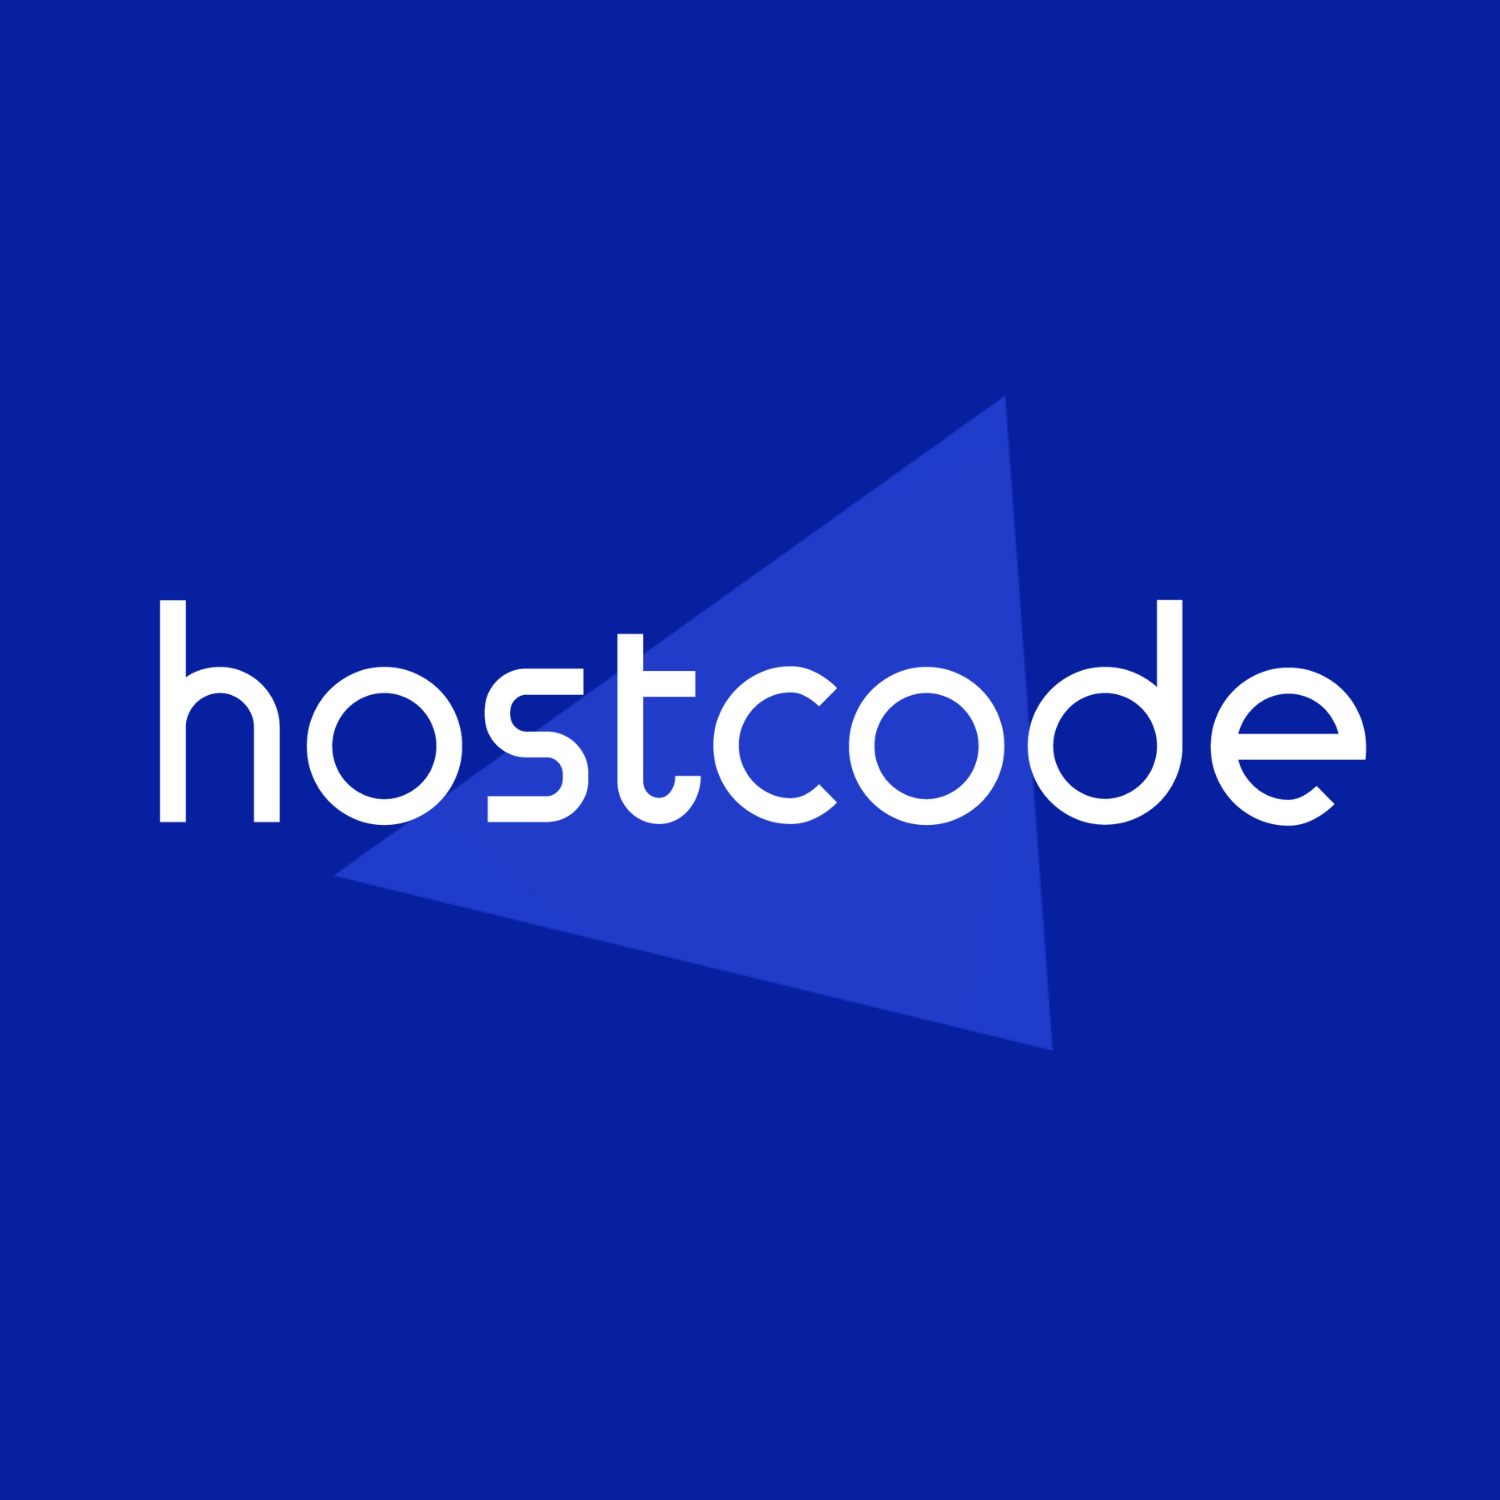 Hostcode Lab